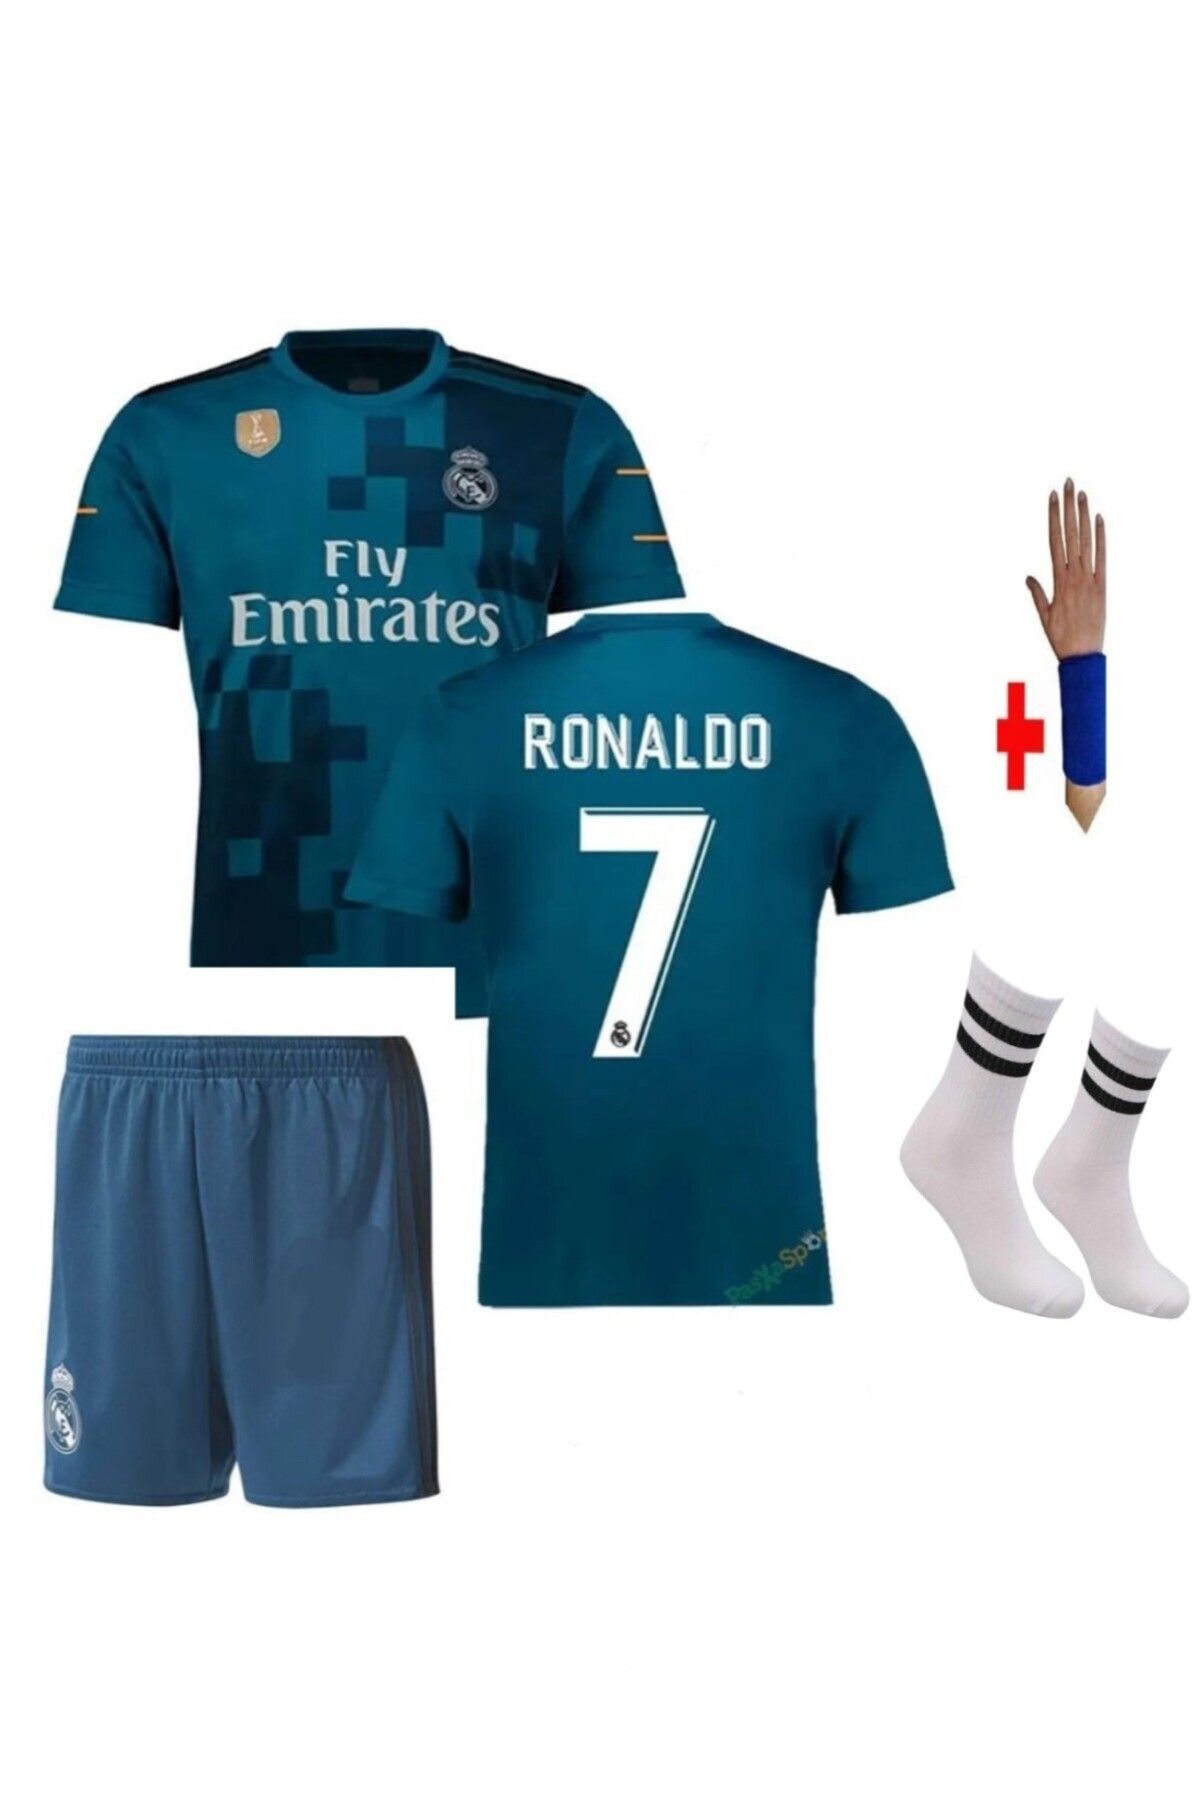 MEDITERIAN Set Real Madrid  Ronaldo Çocuk futbol forması Takımı 4 lü Set 2017/2018 sezon Turkuaz Kumaş